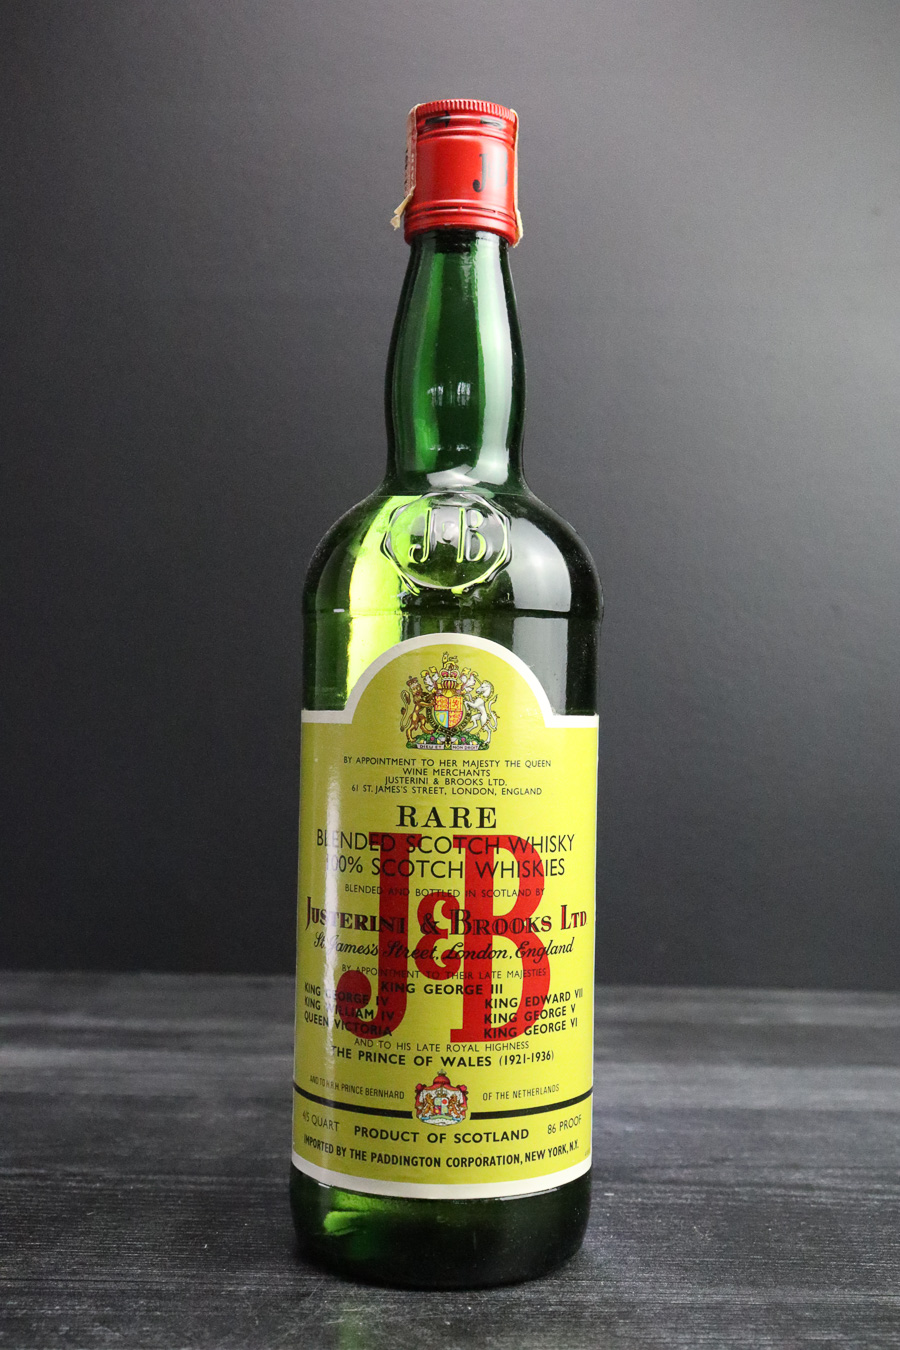 Sold at Auction: J&B blended whiskey